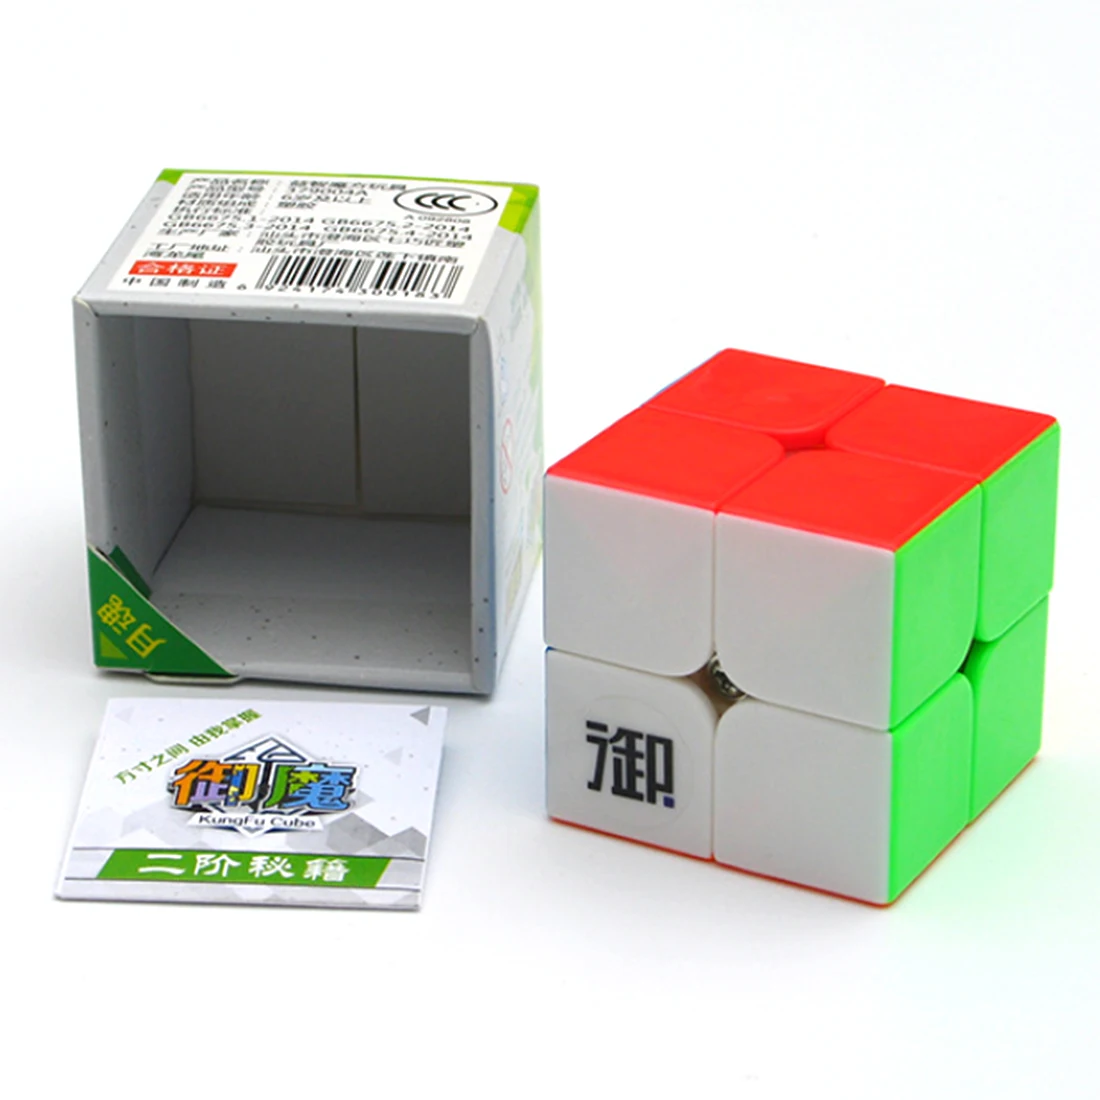 Yumo Yuehun Magic Cube 2x2 Кунг Фу куб пазл игрушки для конкурс вызов красочные Stickerless версия